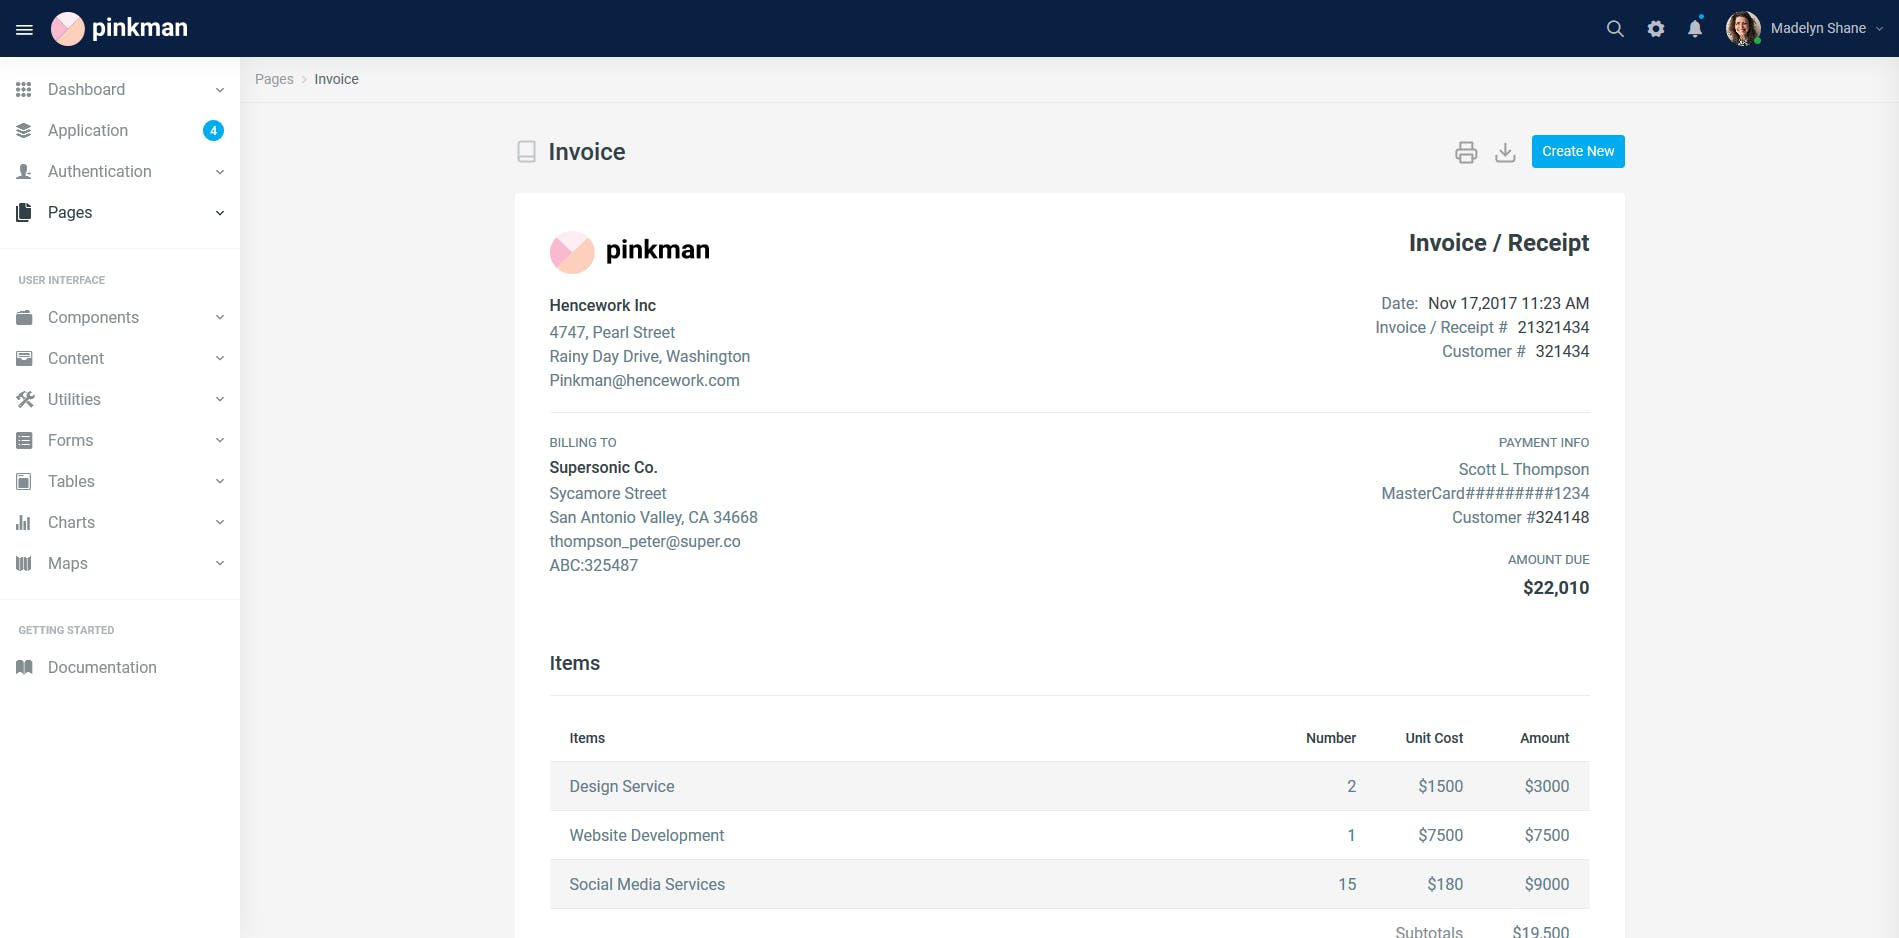 Bootstrap架构网站管理系统模板非凡图库精选下载 Pinkman – Bootstrap 4 Admin Dashboard Template插图(14)